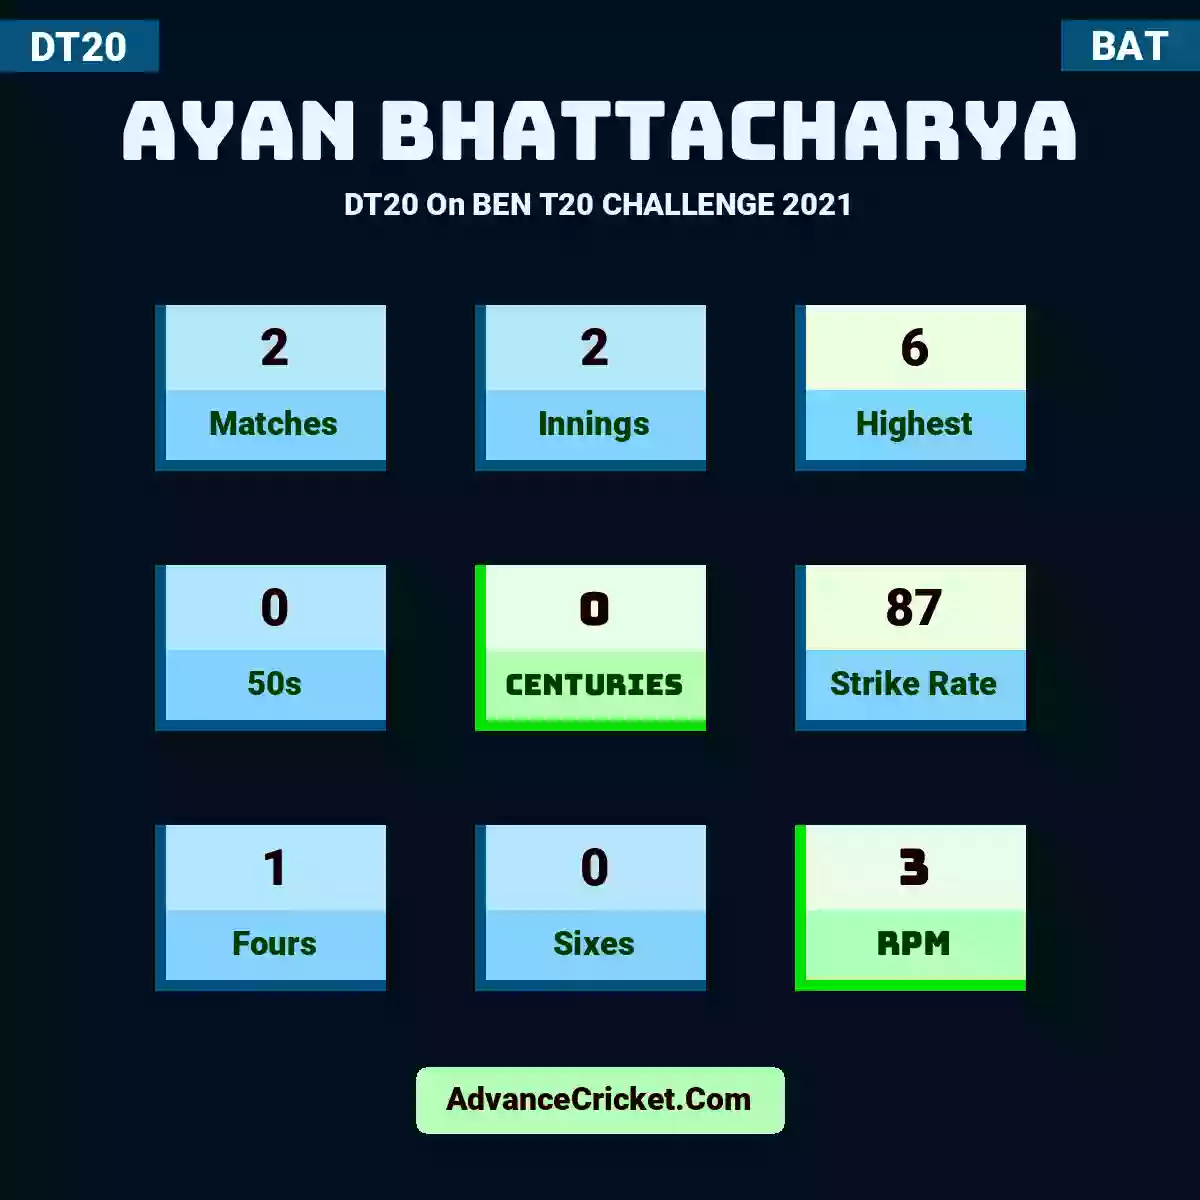 Ayan Bhattacharya DT20  On BEN T20 CHALLENGE 2021, Ayan Bhattacharya played 2 matches, scored 6 runs as highest, 0 half-centuries, and 0 centuries, with a strike rate of 87. A.Bhattacharya hit 1 fours and 0 sixes, with an RPM of 3.